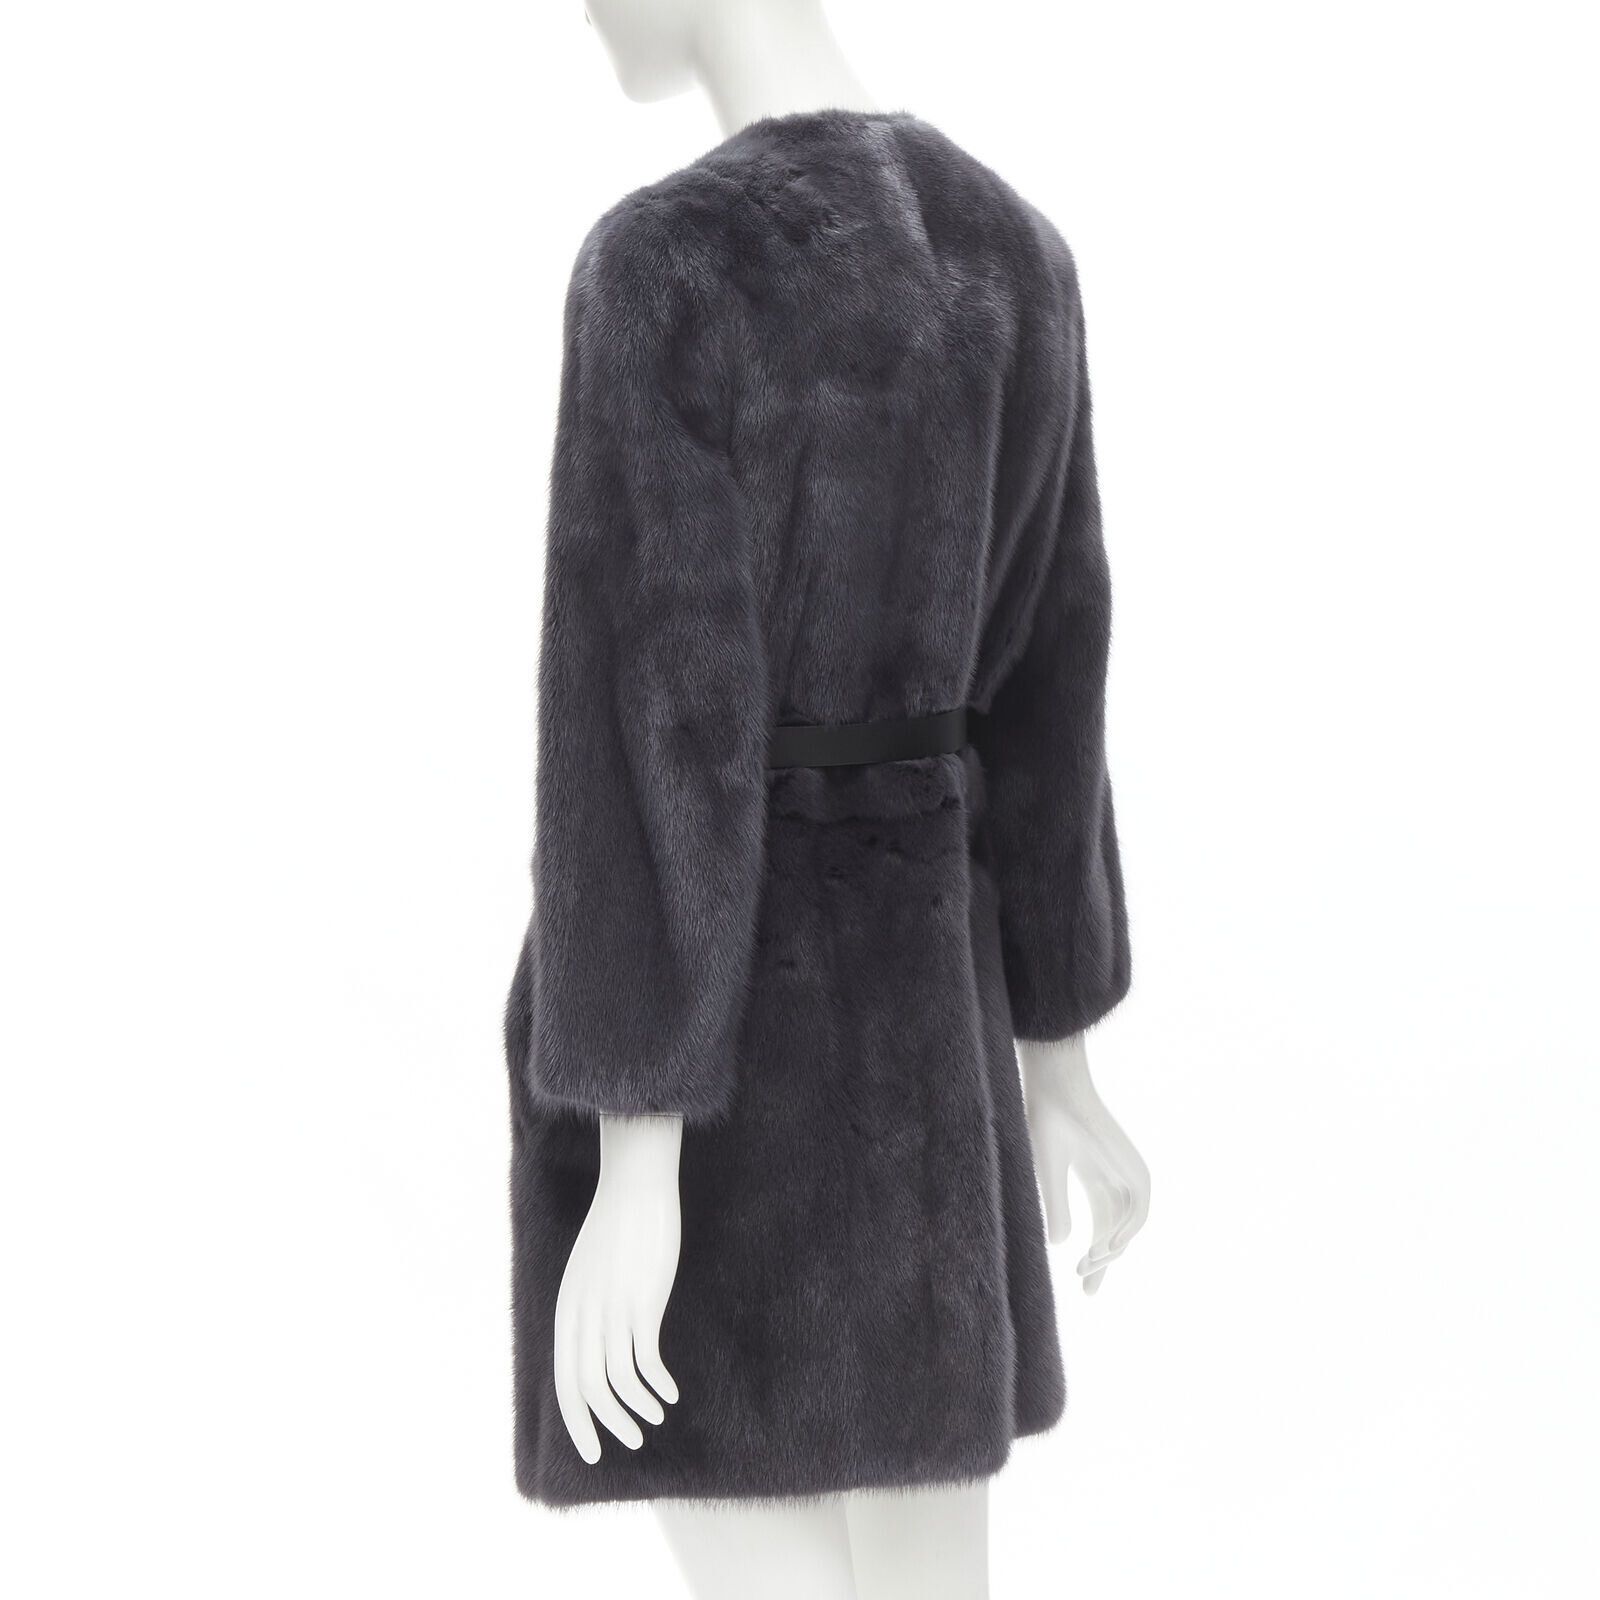 Fendi FENDI grey black fur leather 4-way reversible zip belted coat jacket IT38 Size XS / US 0-2 / IT 36-38 - 6 Thumbnail